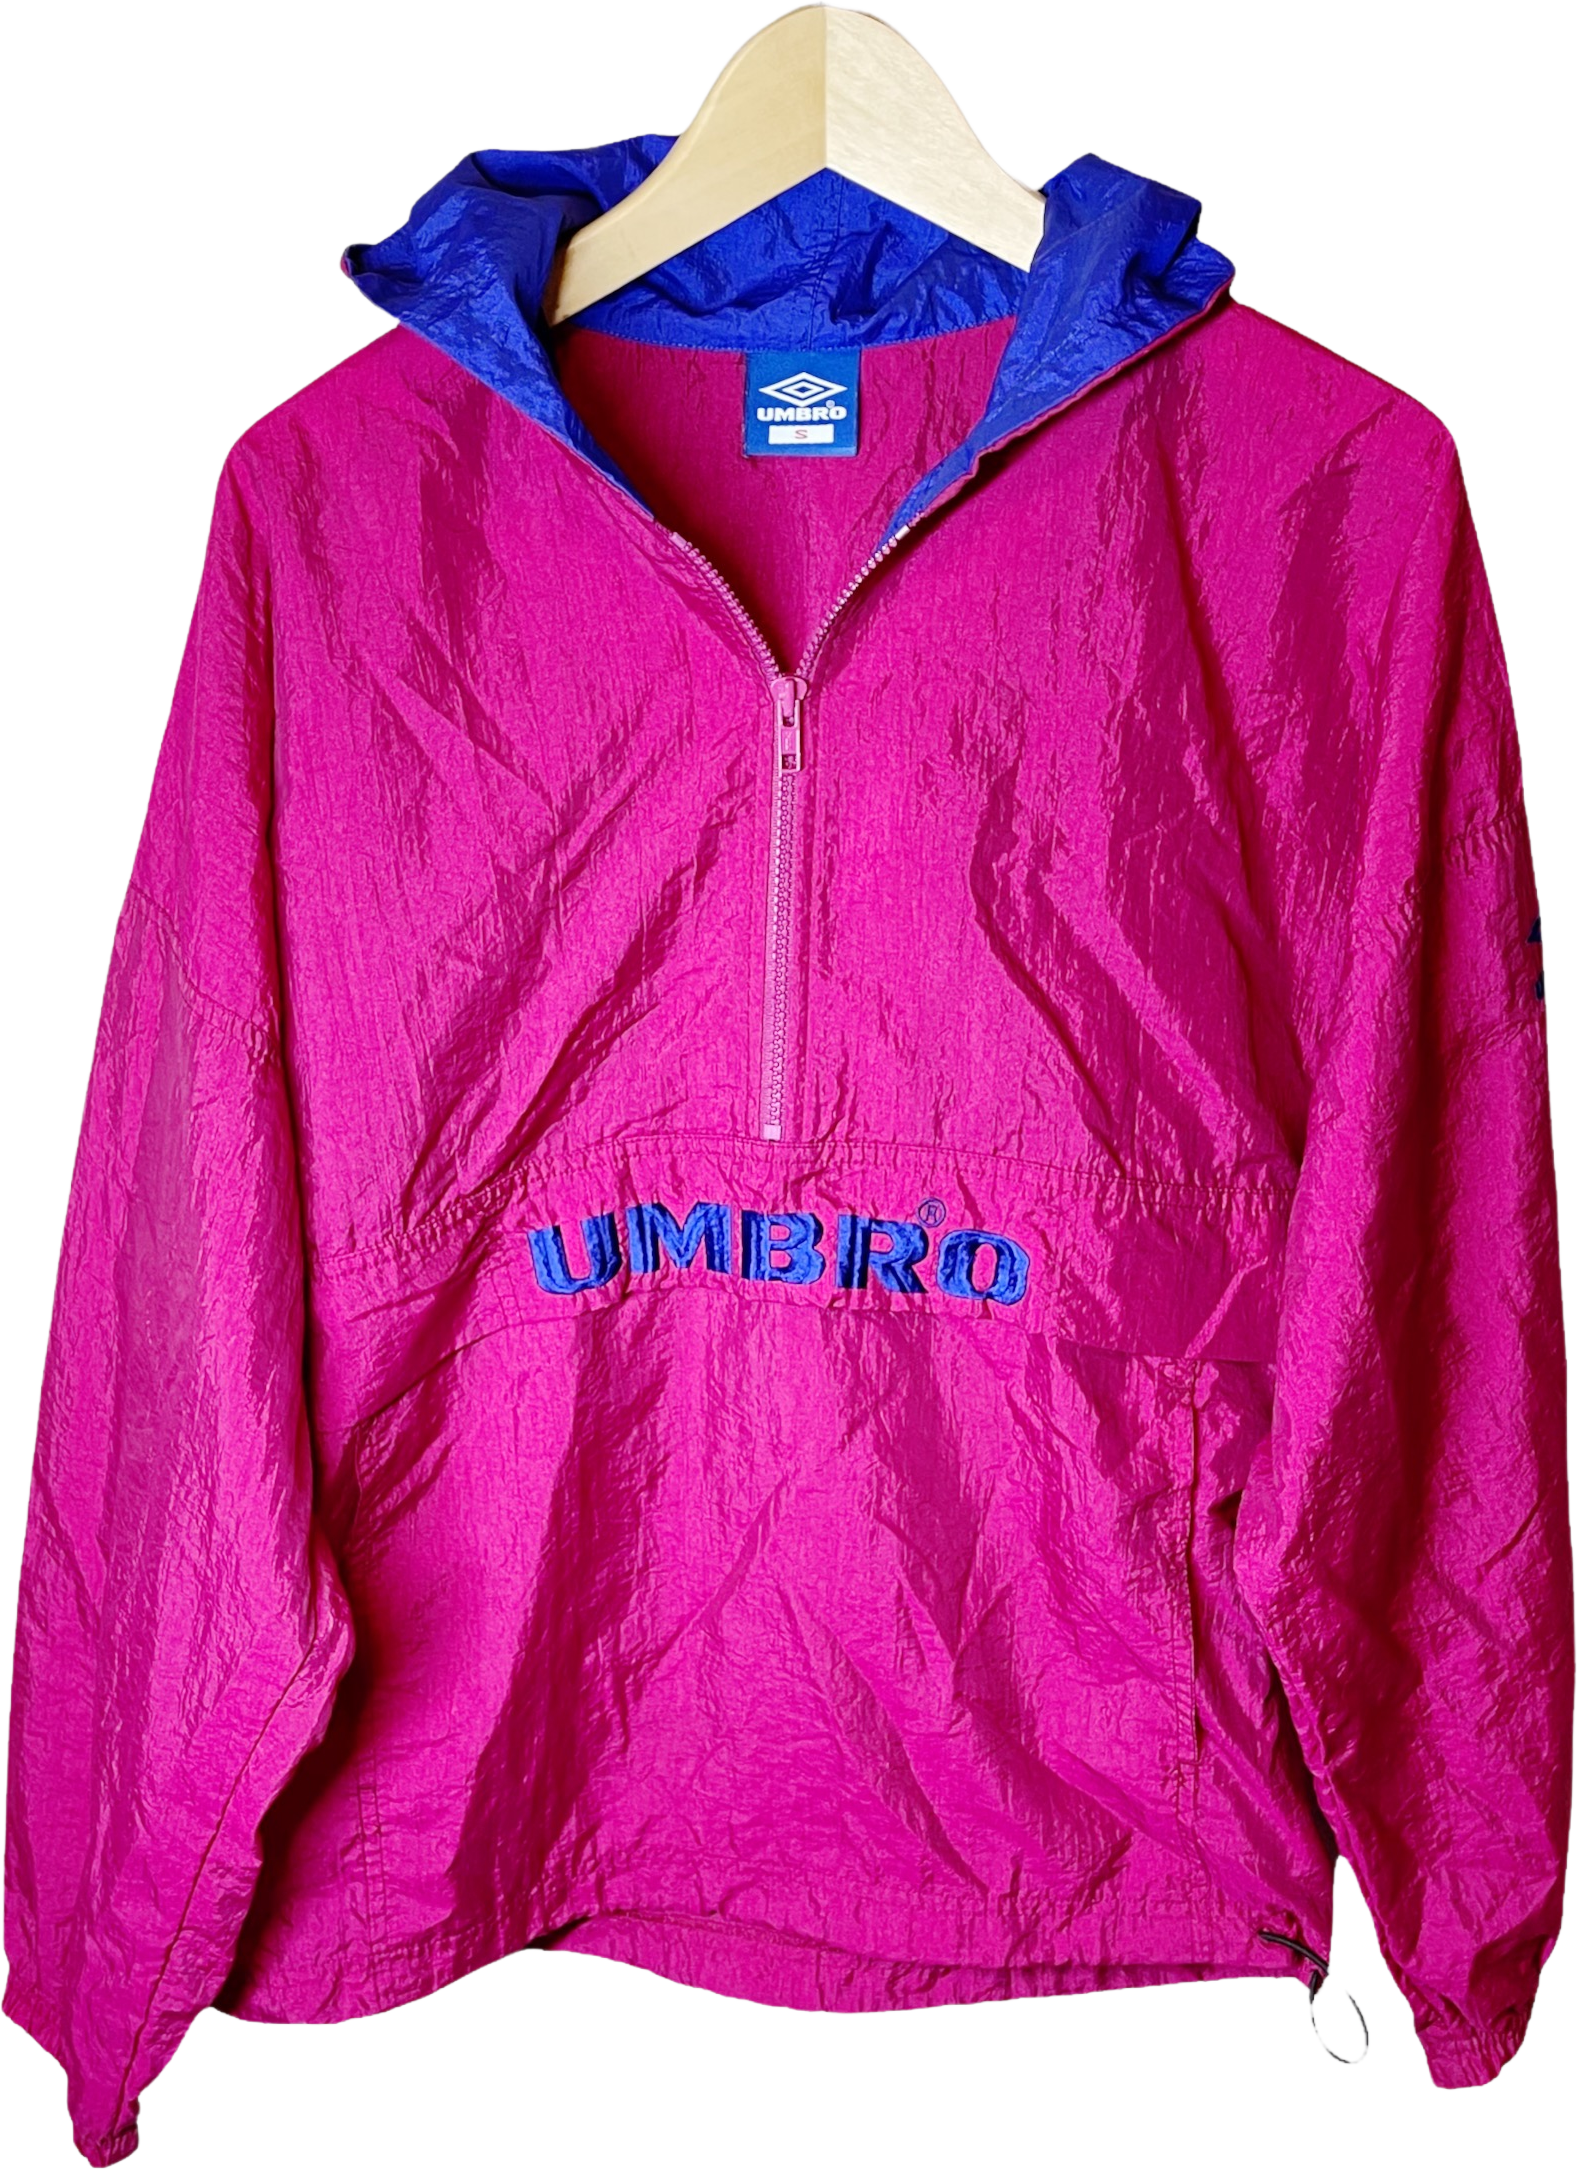 Vintage 80s/90s Half Zip Hooded Pullover Windbreaker Jacket By Umbro Shop